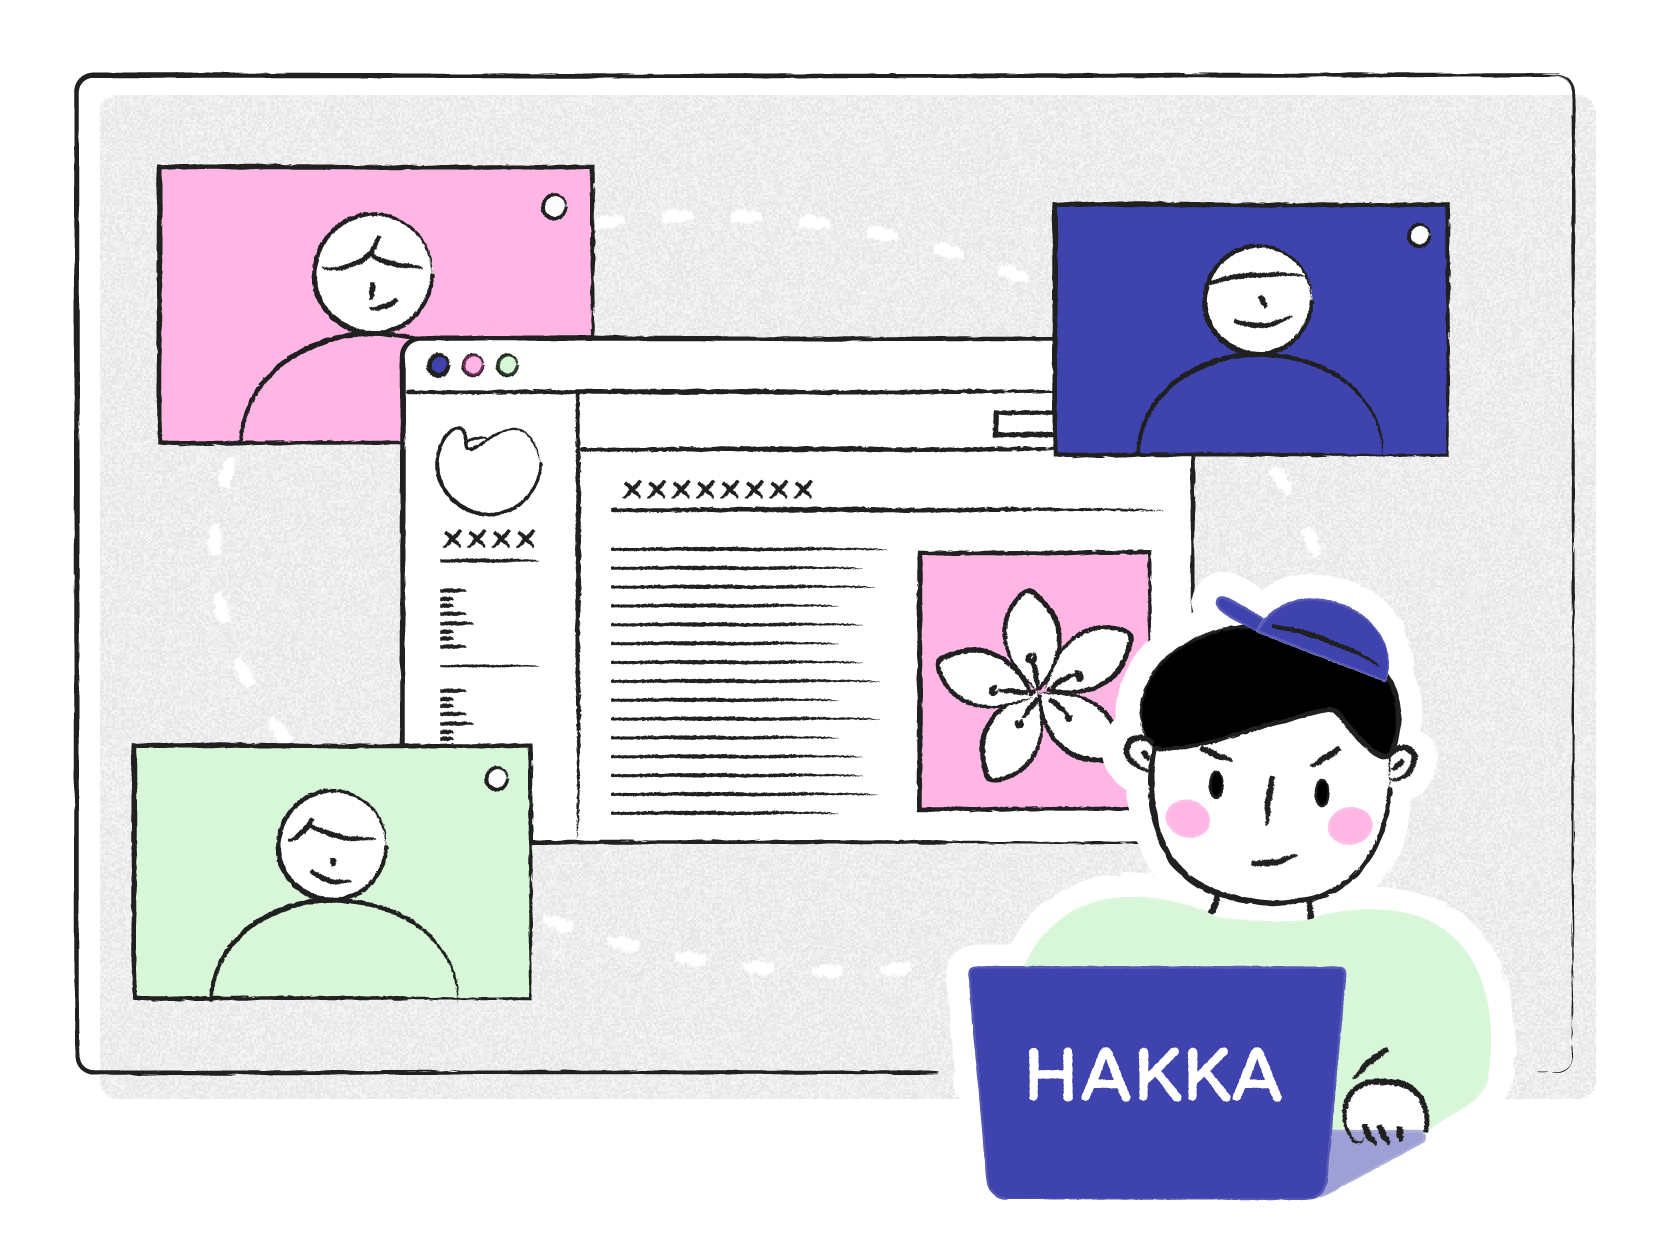 Thumbnail for 'Hakka x OpenData'